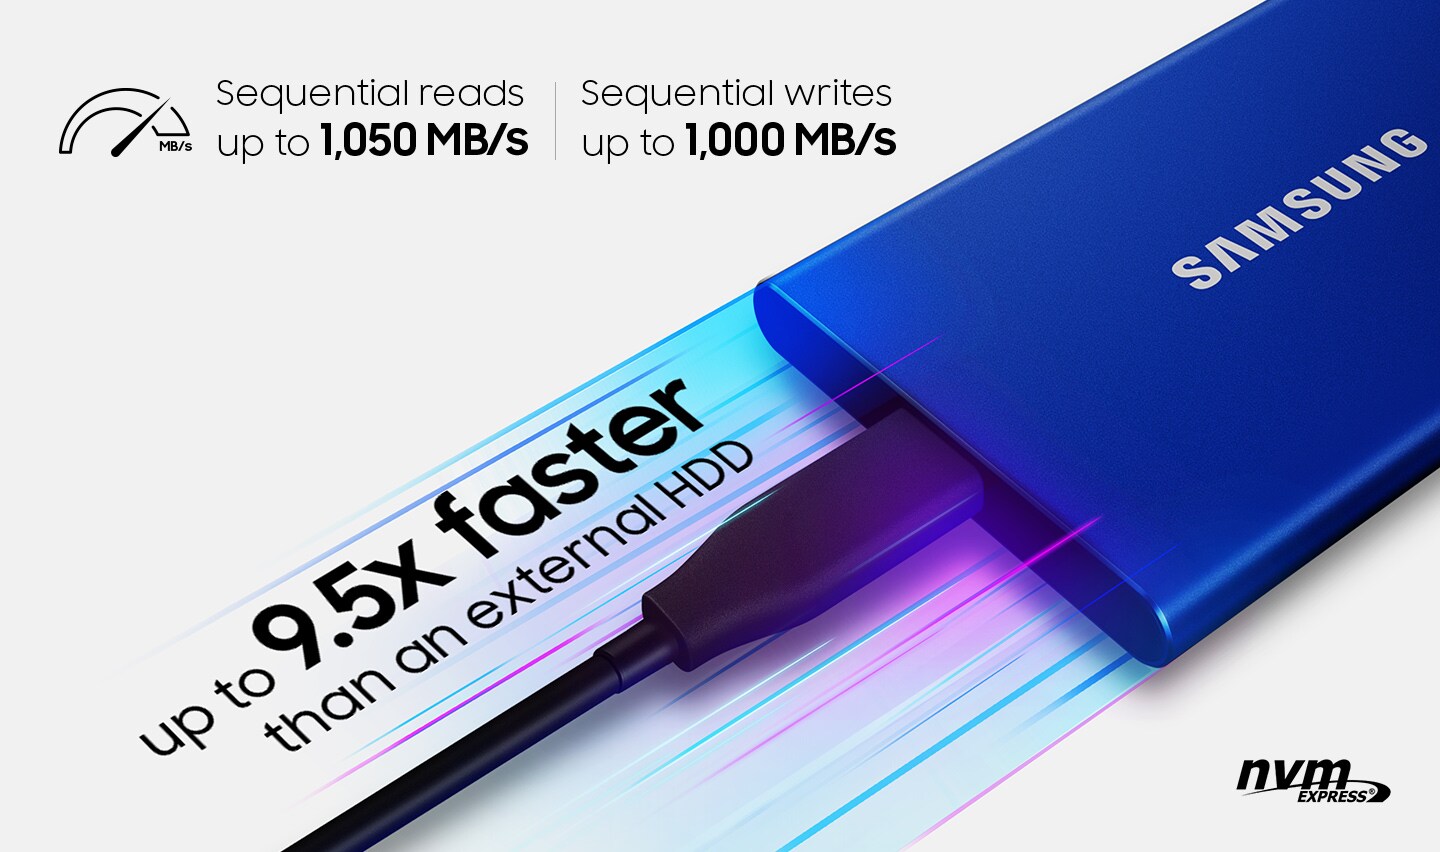 Disque externe SSD T7 500Go Samsung titane - ISTORE